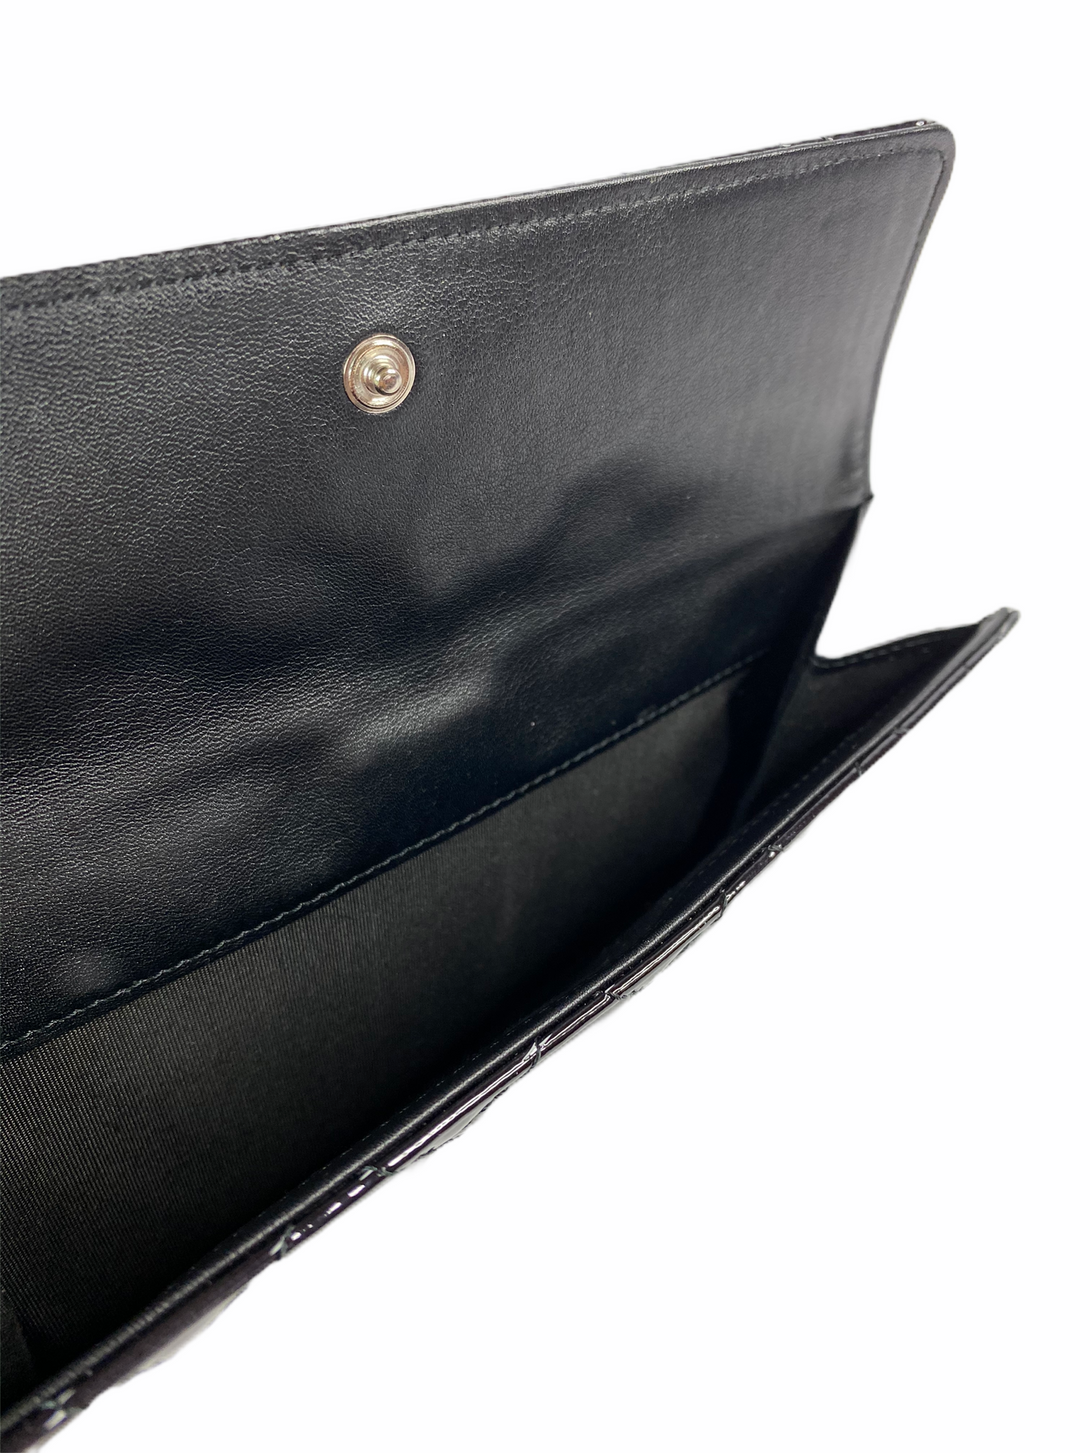 Chanel Black Patent Leather Purse - Siopaella Designer Exchange